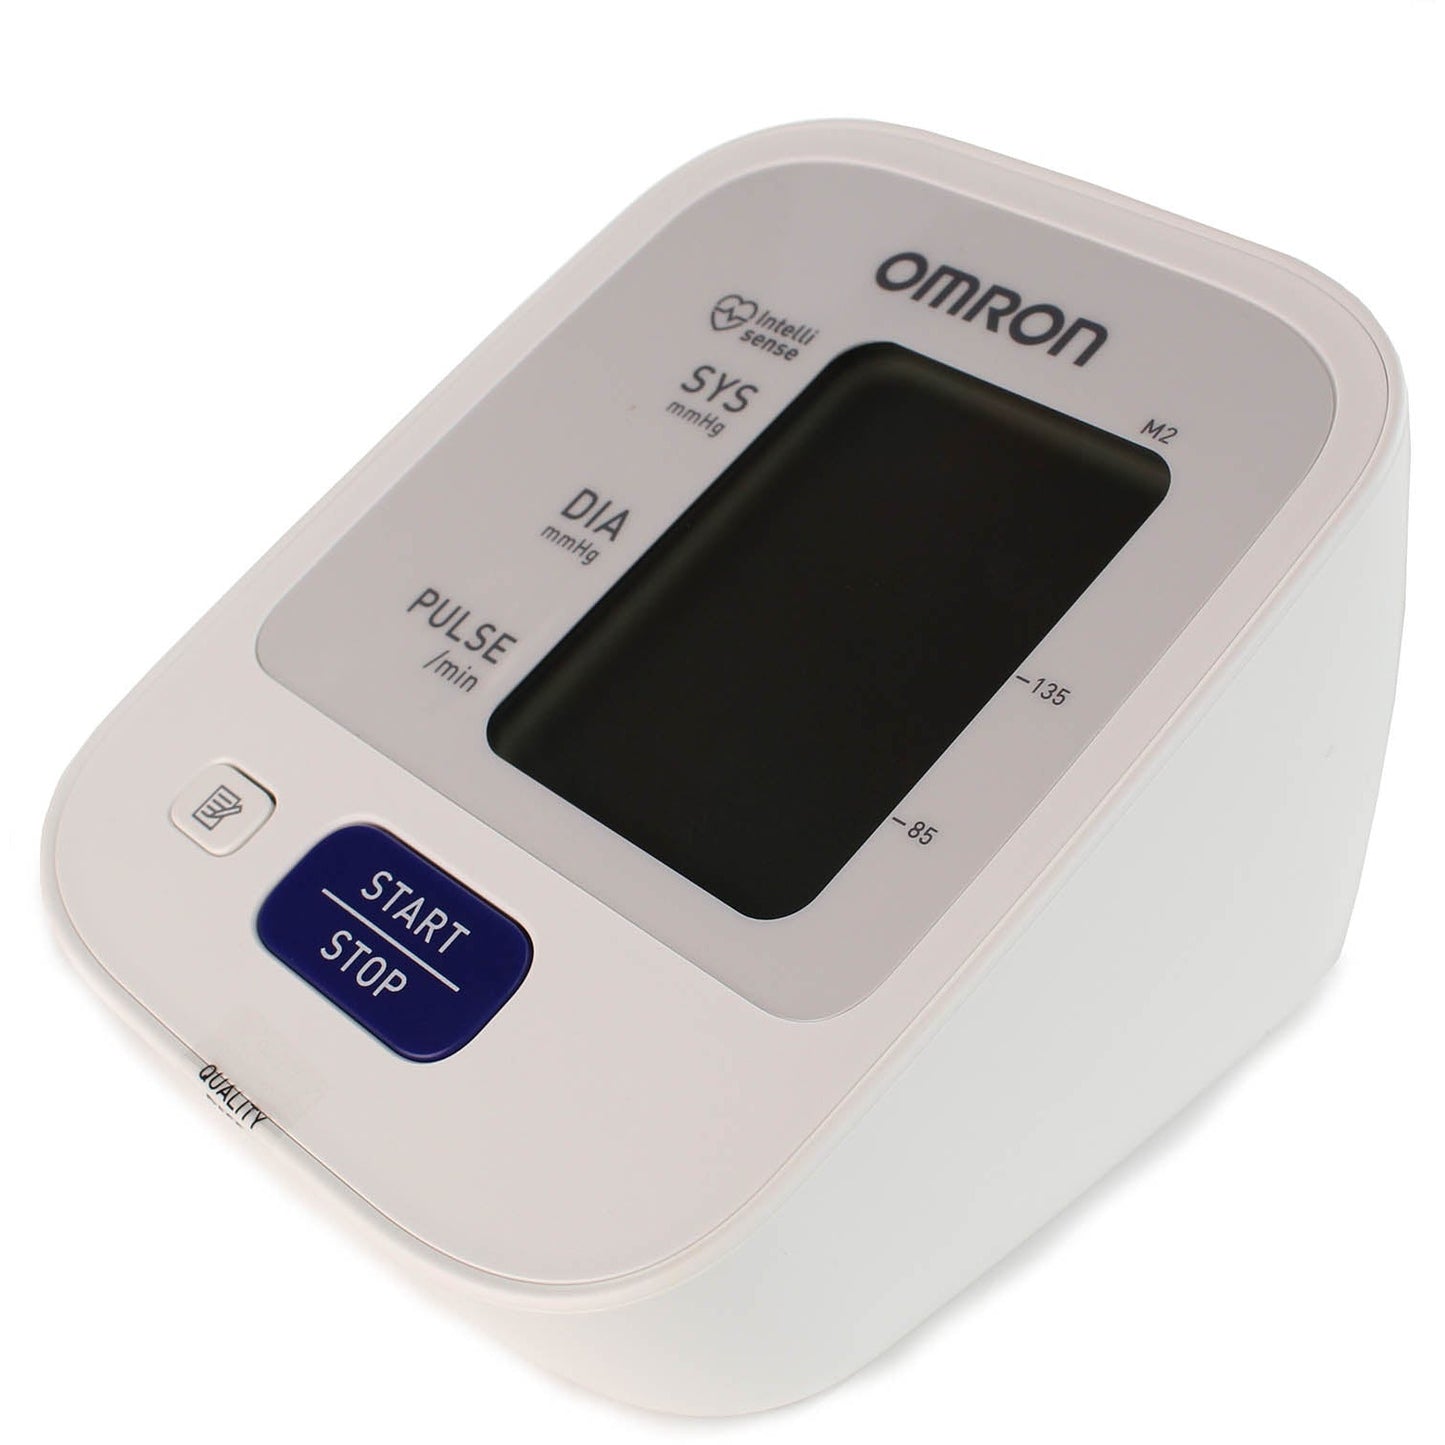 Omron M2 Basic Blood Pressure Monitor - New Version